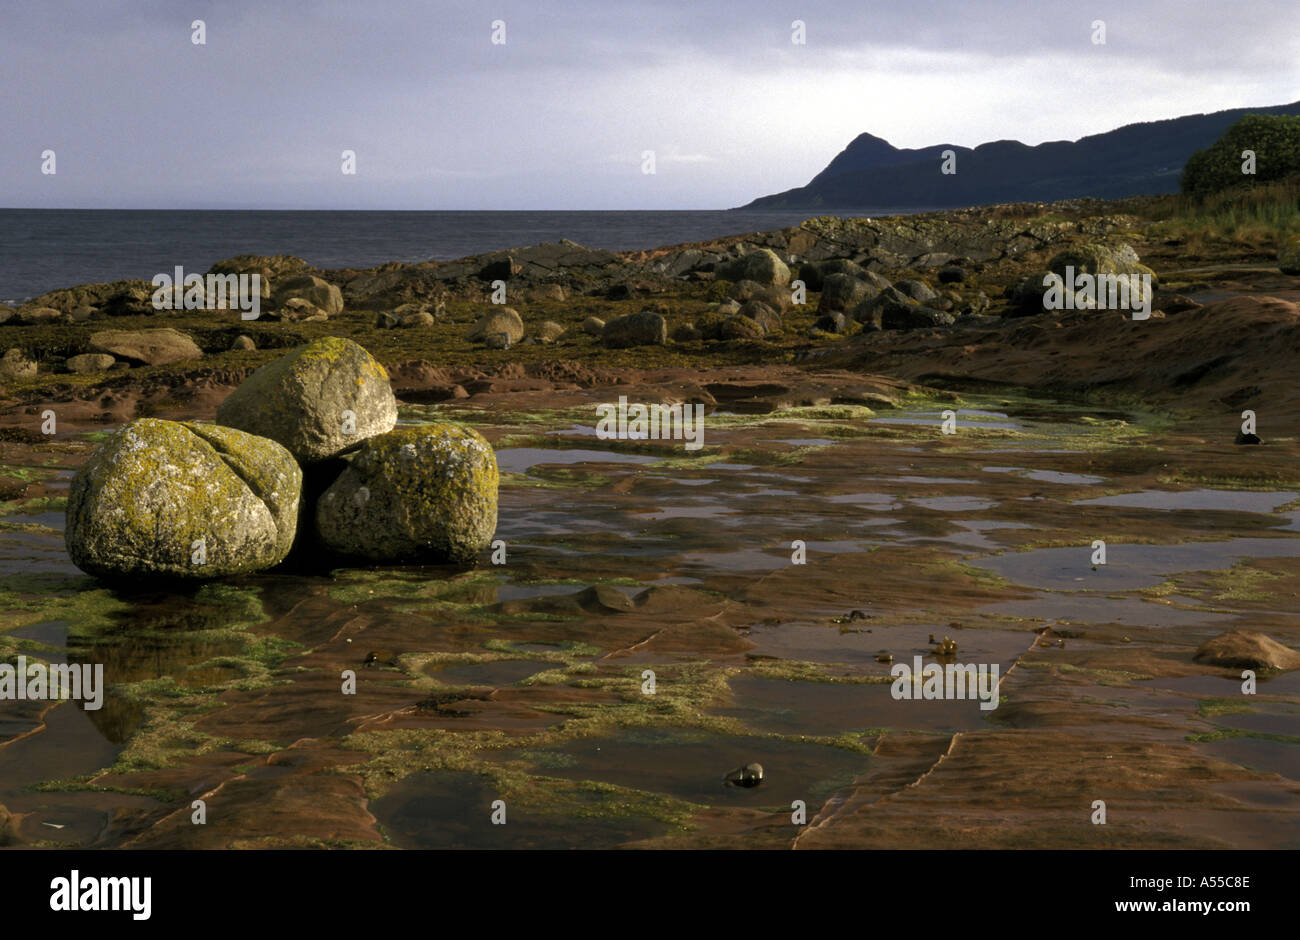 MERKLAND POINT ISLE OF ARRAN SCOTLAND LOOKING ACROSS BRODICK BAY TOWARDS CLAUCHLANDS POINT Stock Photo